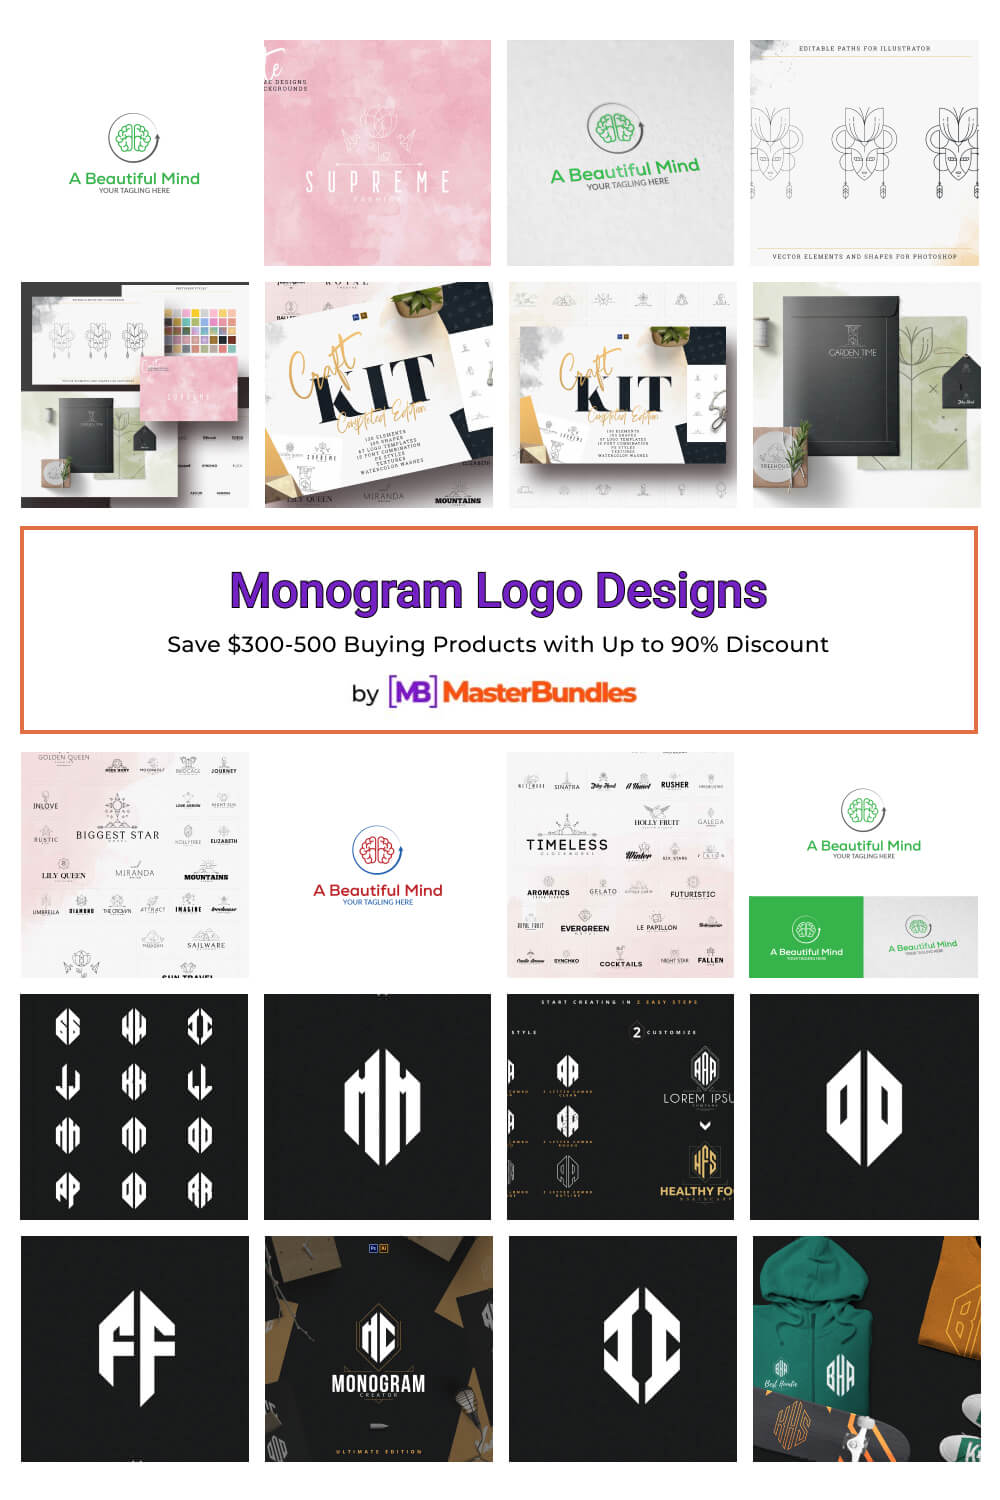 monogram logo designs pinterest image.